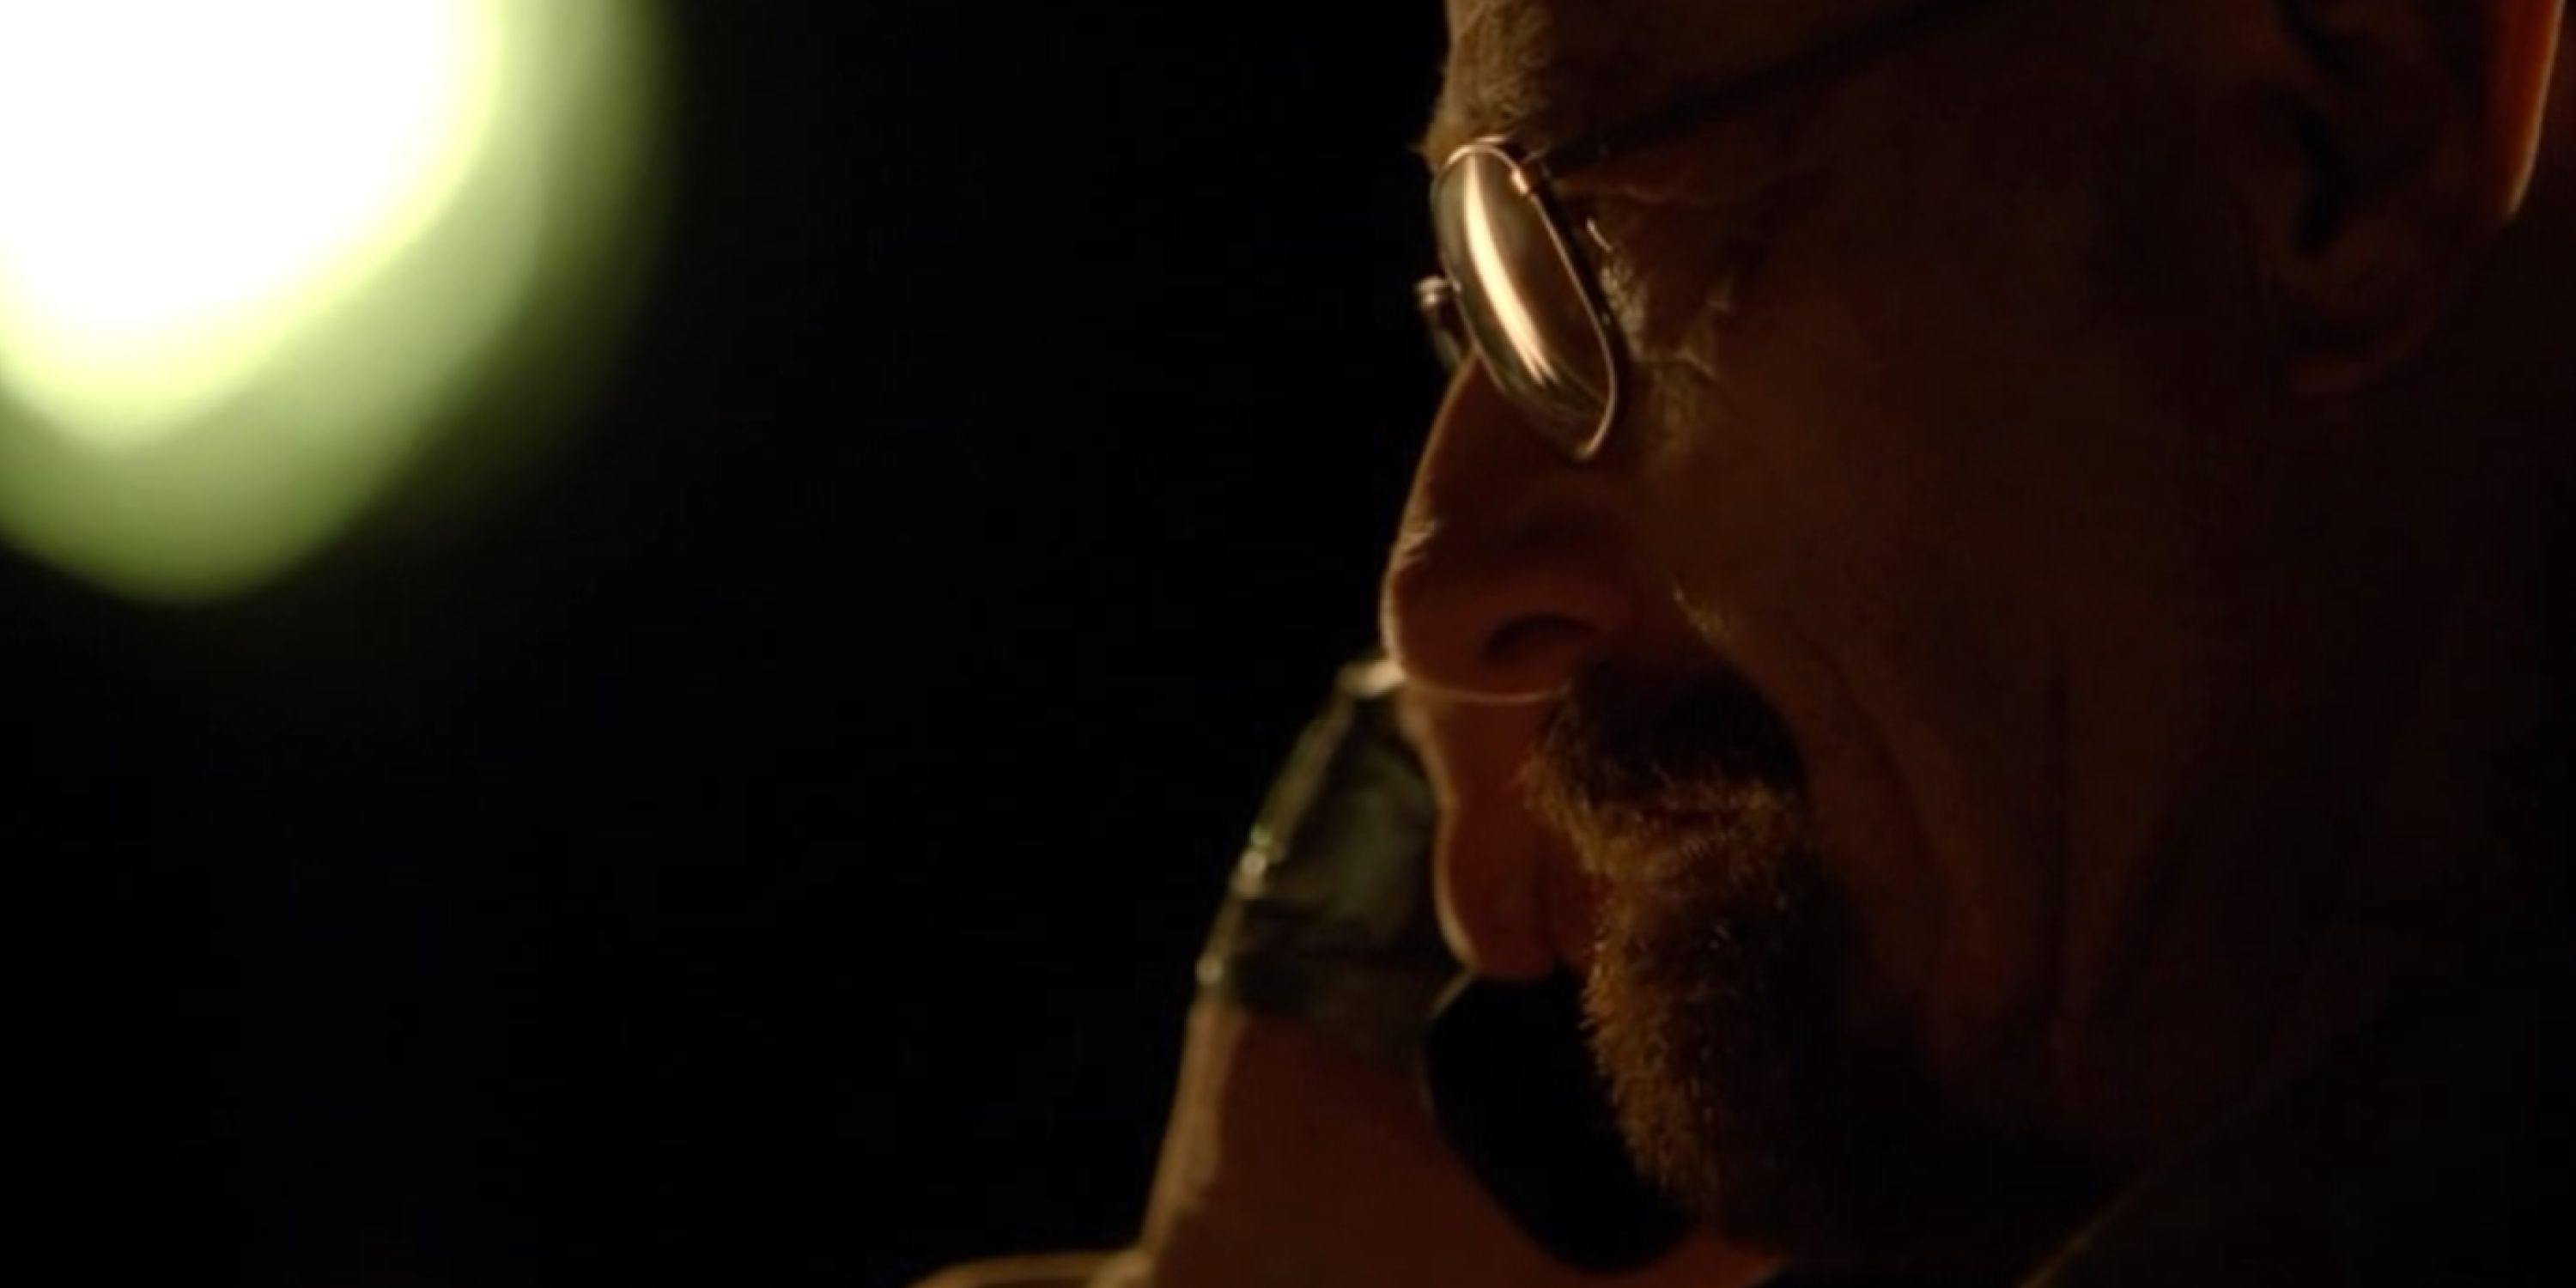 Walt on the phone in the Breaking Bad episode "Ozymandias"